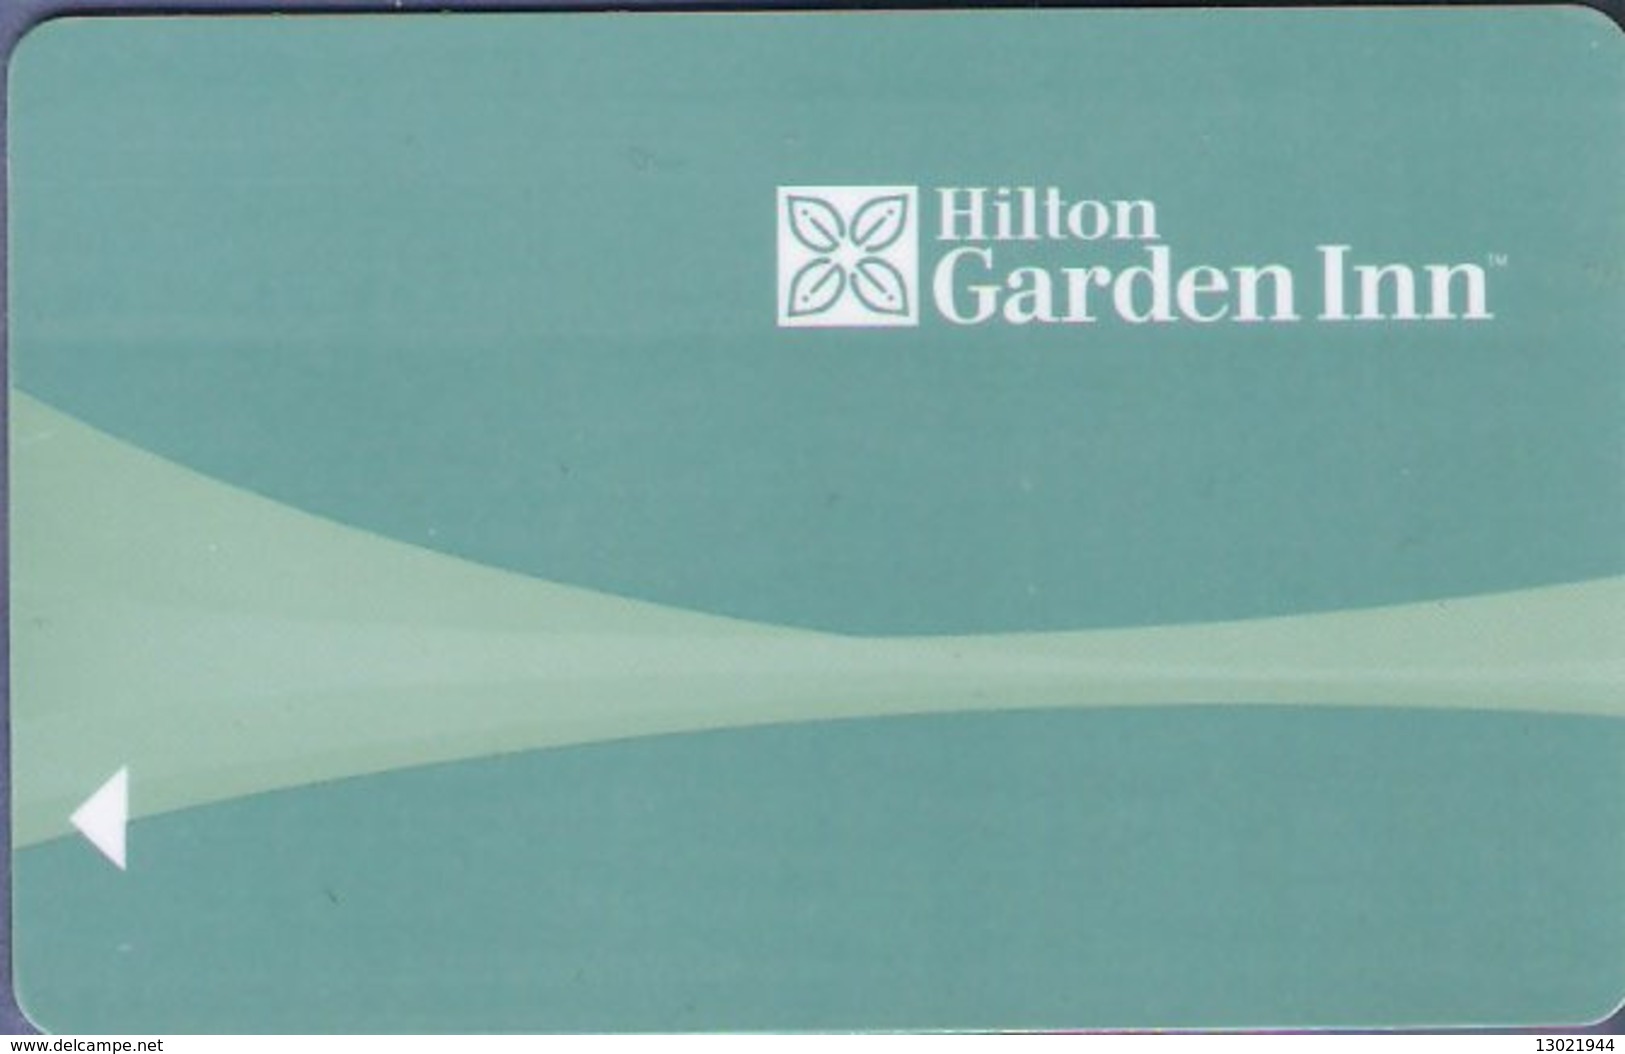 TURCHIA KEY HOTEL  Hilton Garden Inn - Hotelkarten